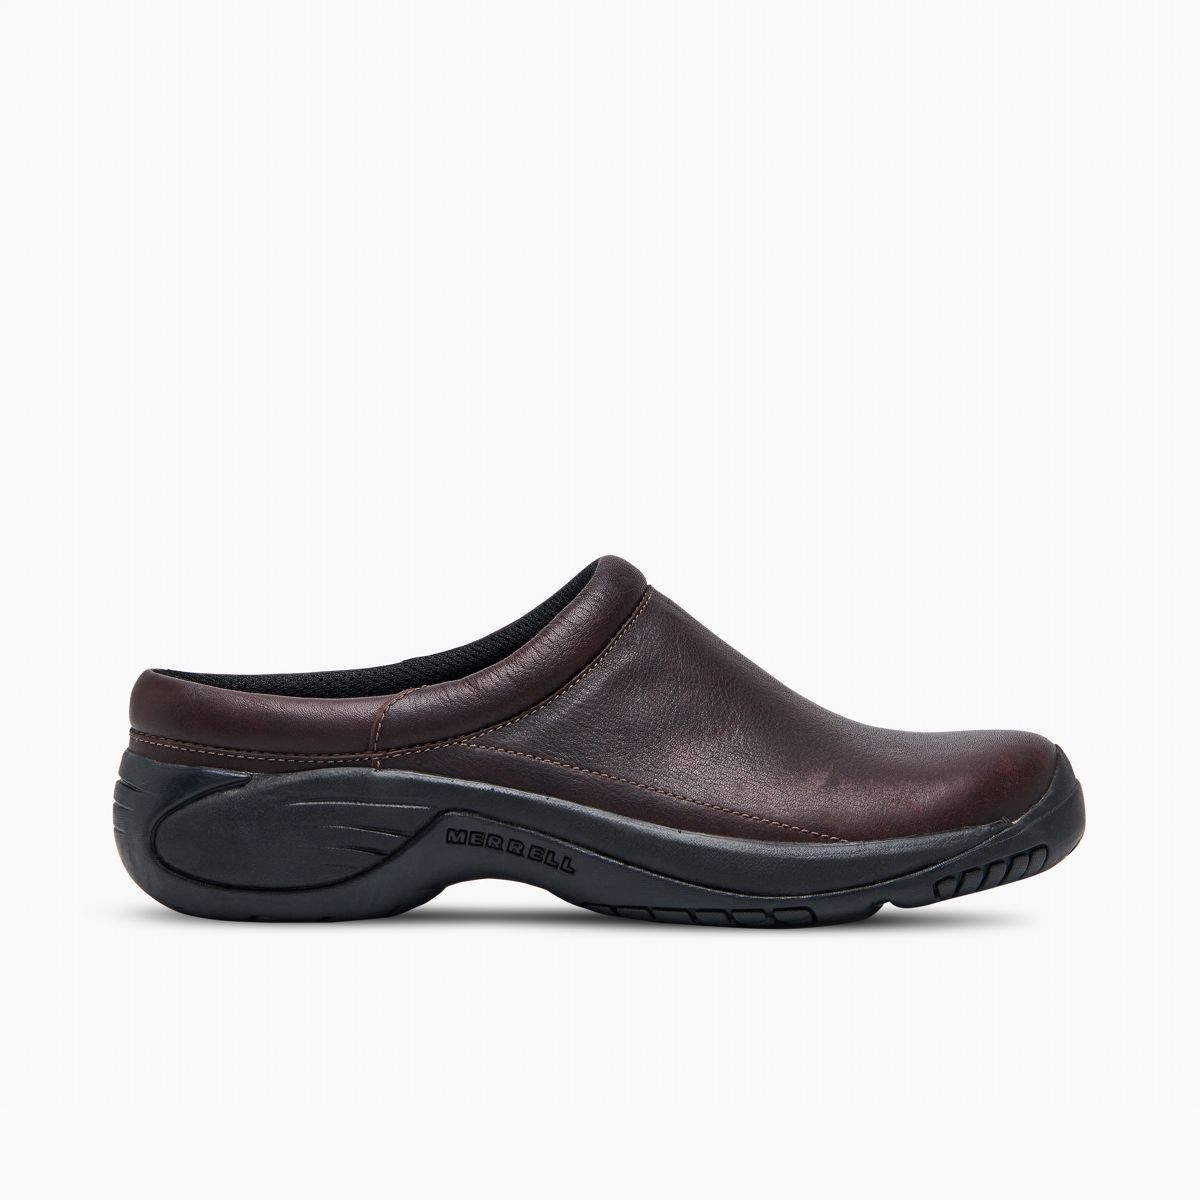 Men's Encore Gust Casual Shoes | Merrell